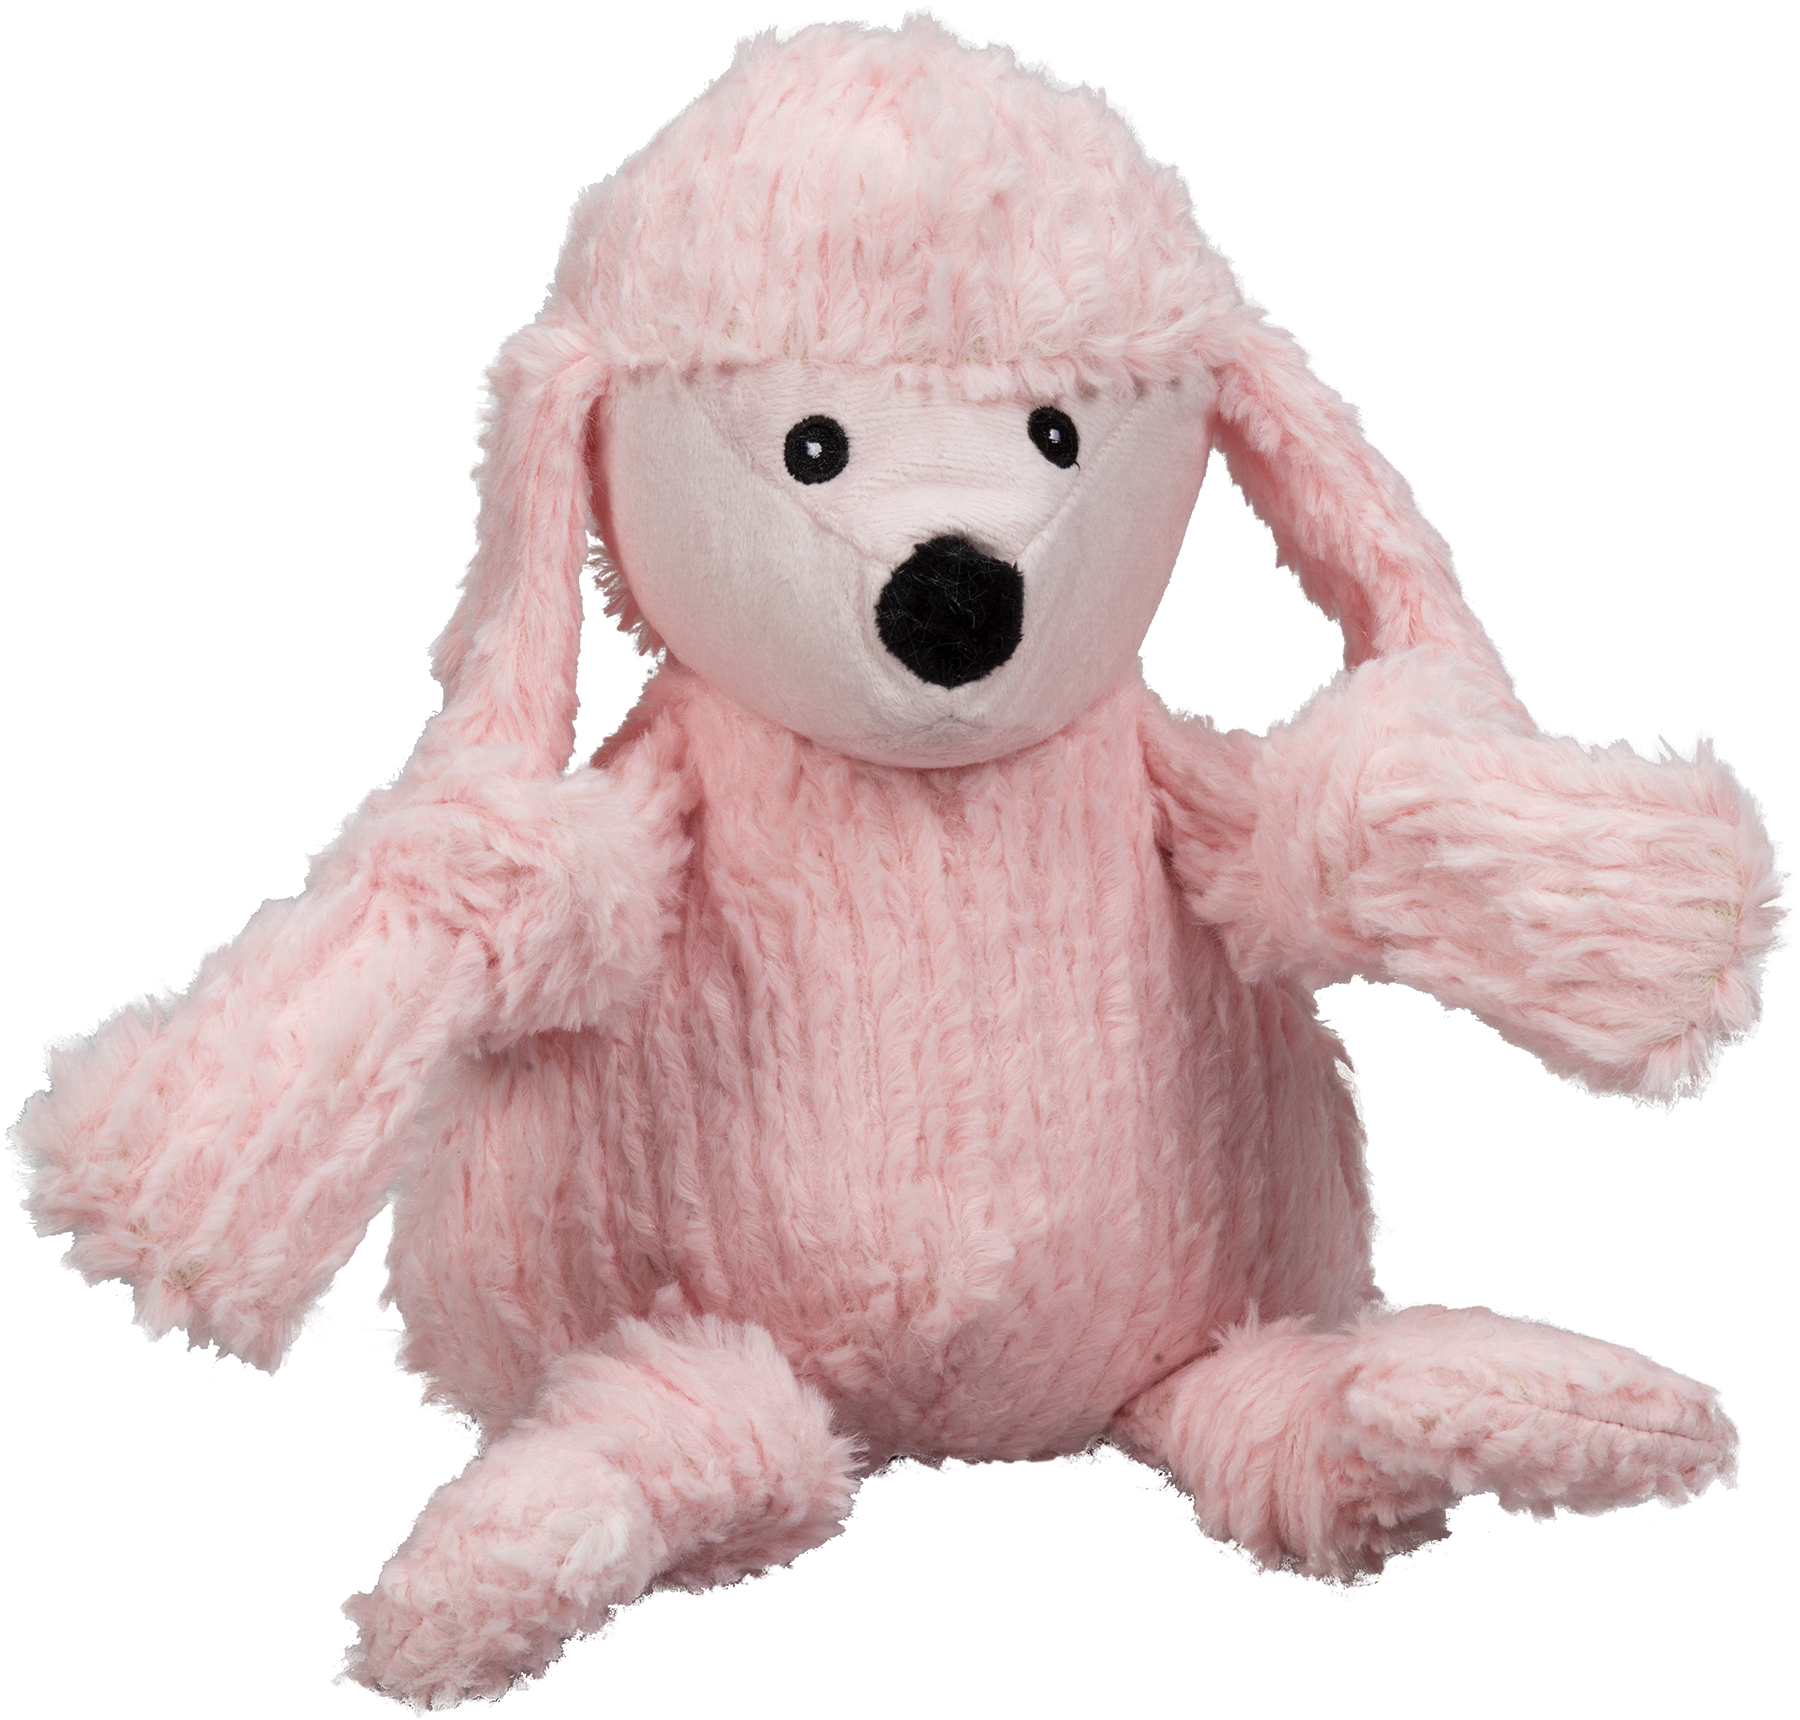 Webkinz, Toys, Webkinz Pink Poodle Plush